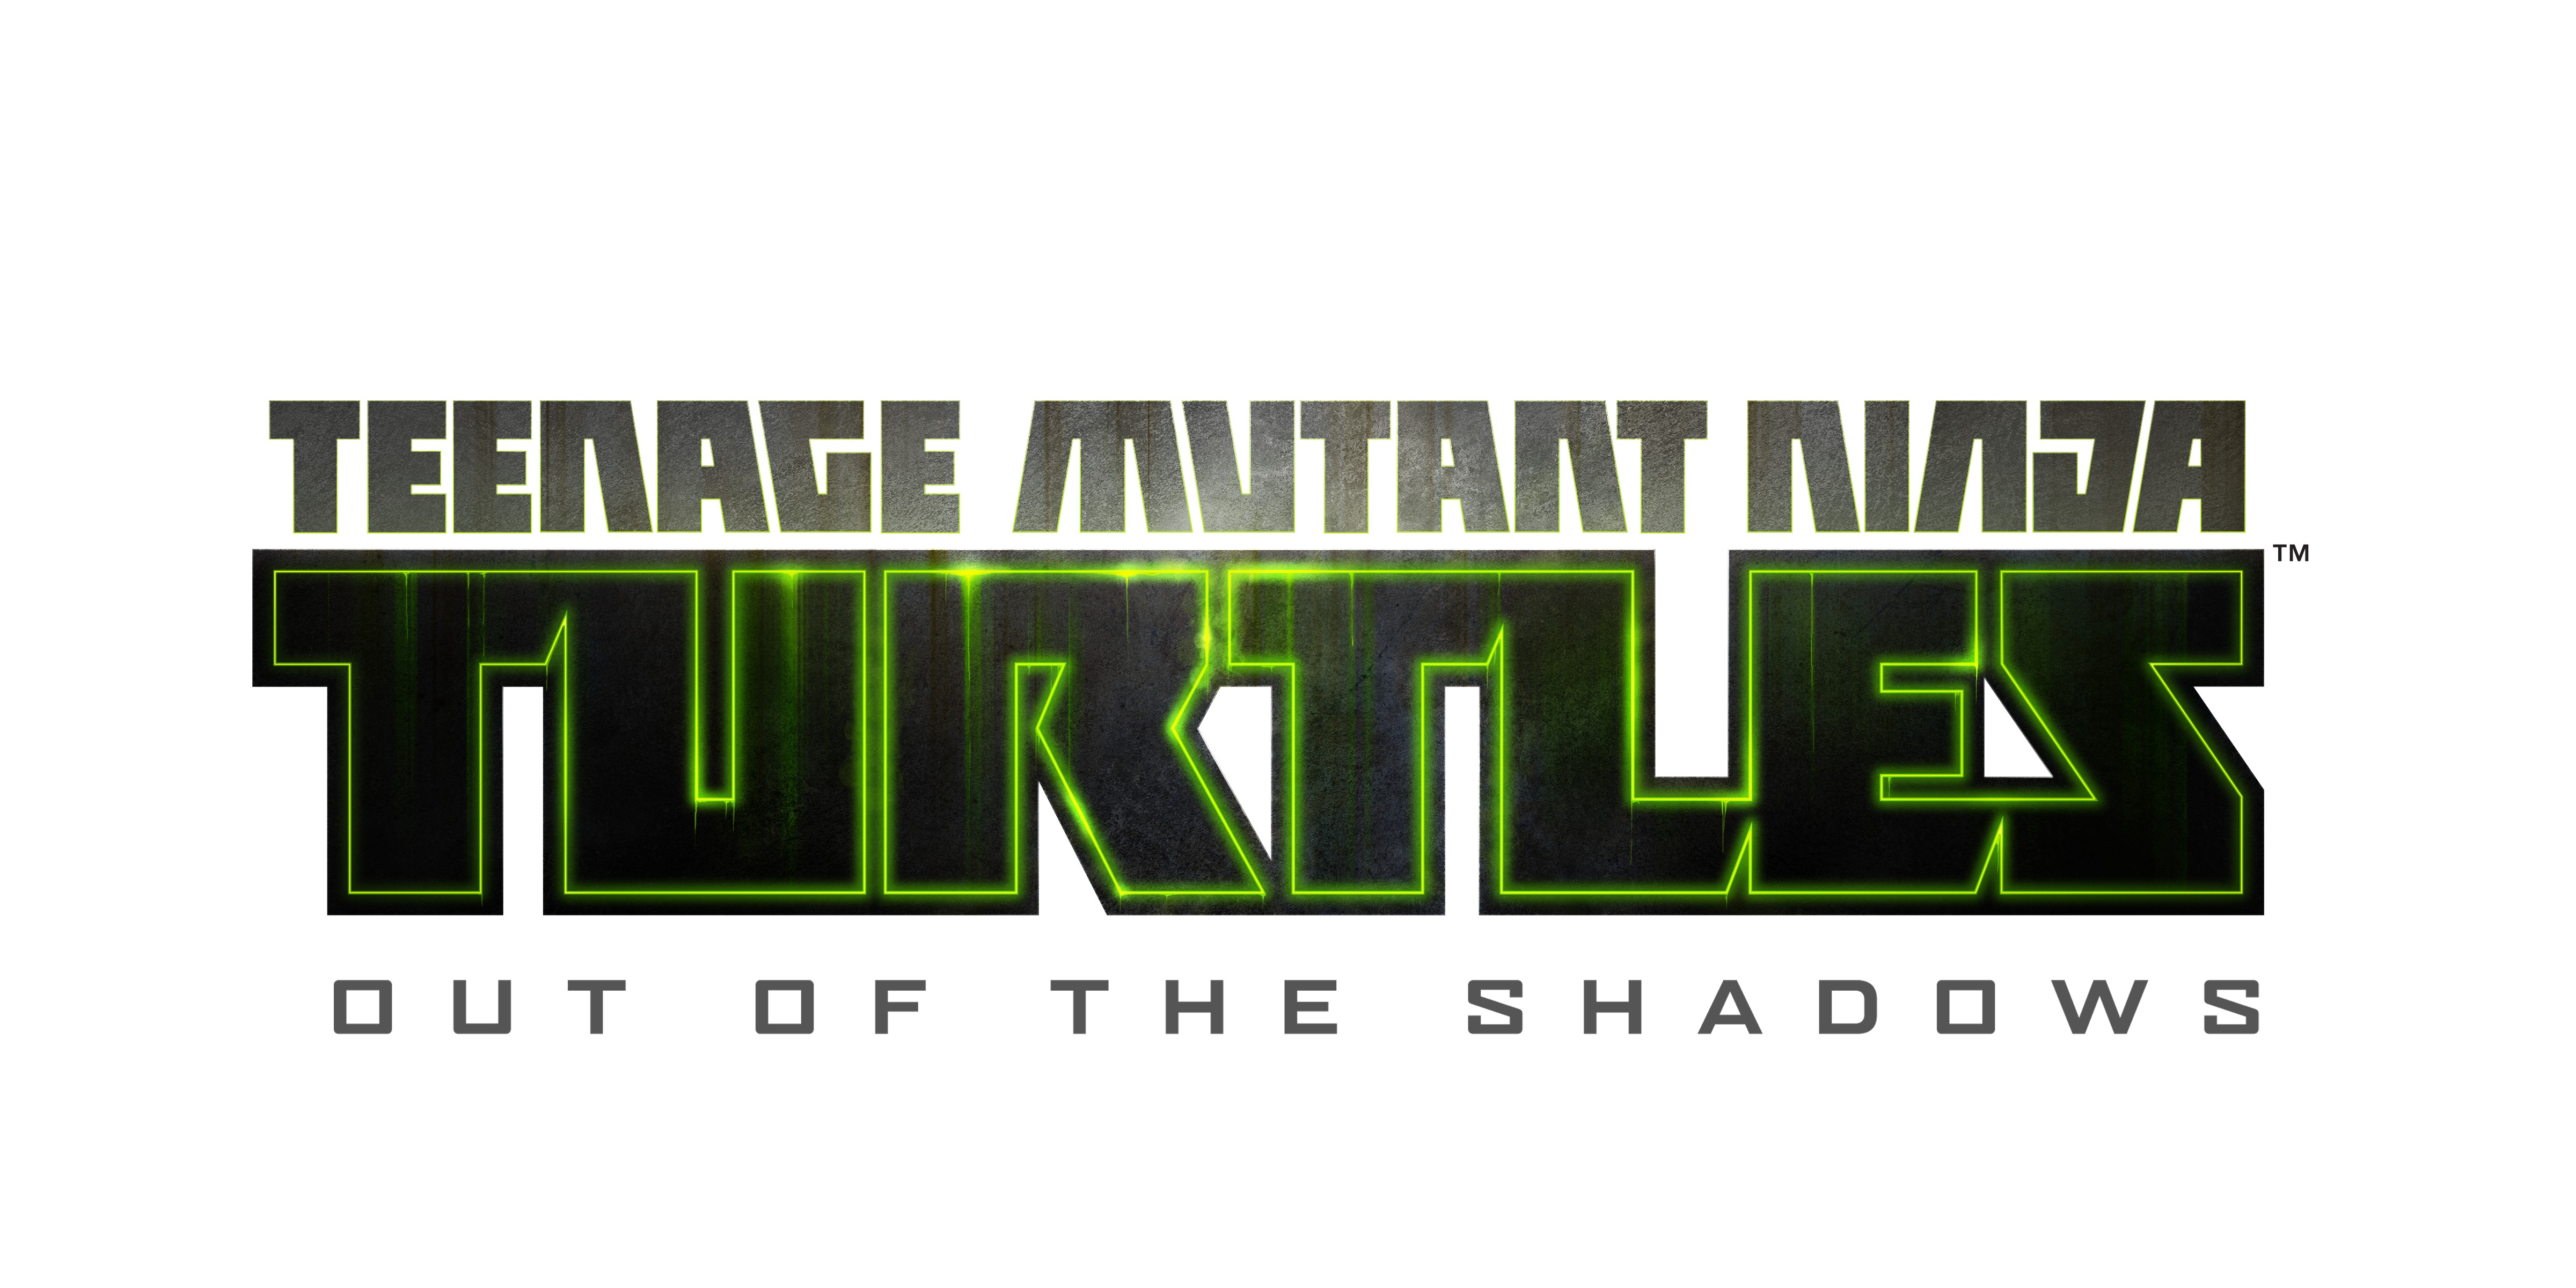 Teenage mutant ninja turtles out of the shadows купить стим фото 56